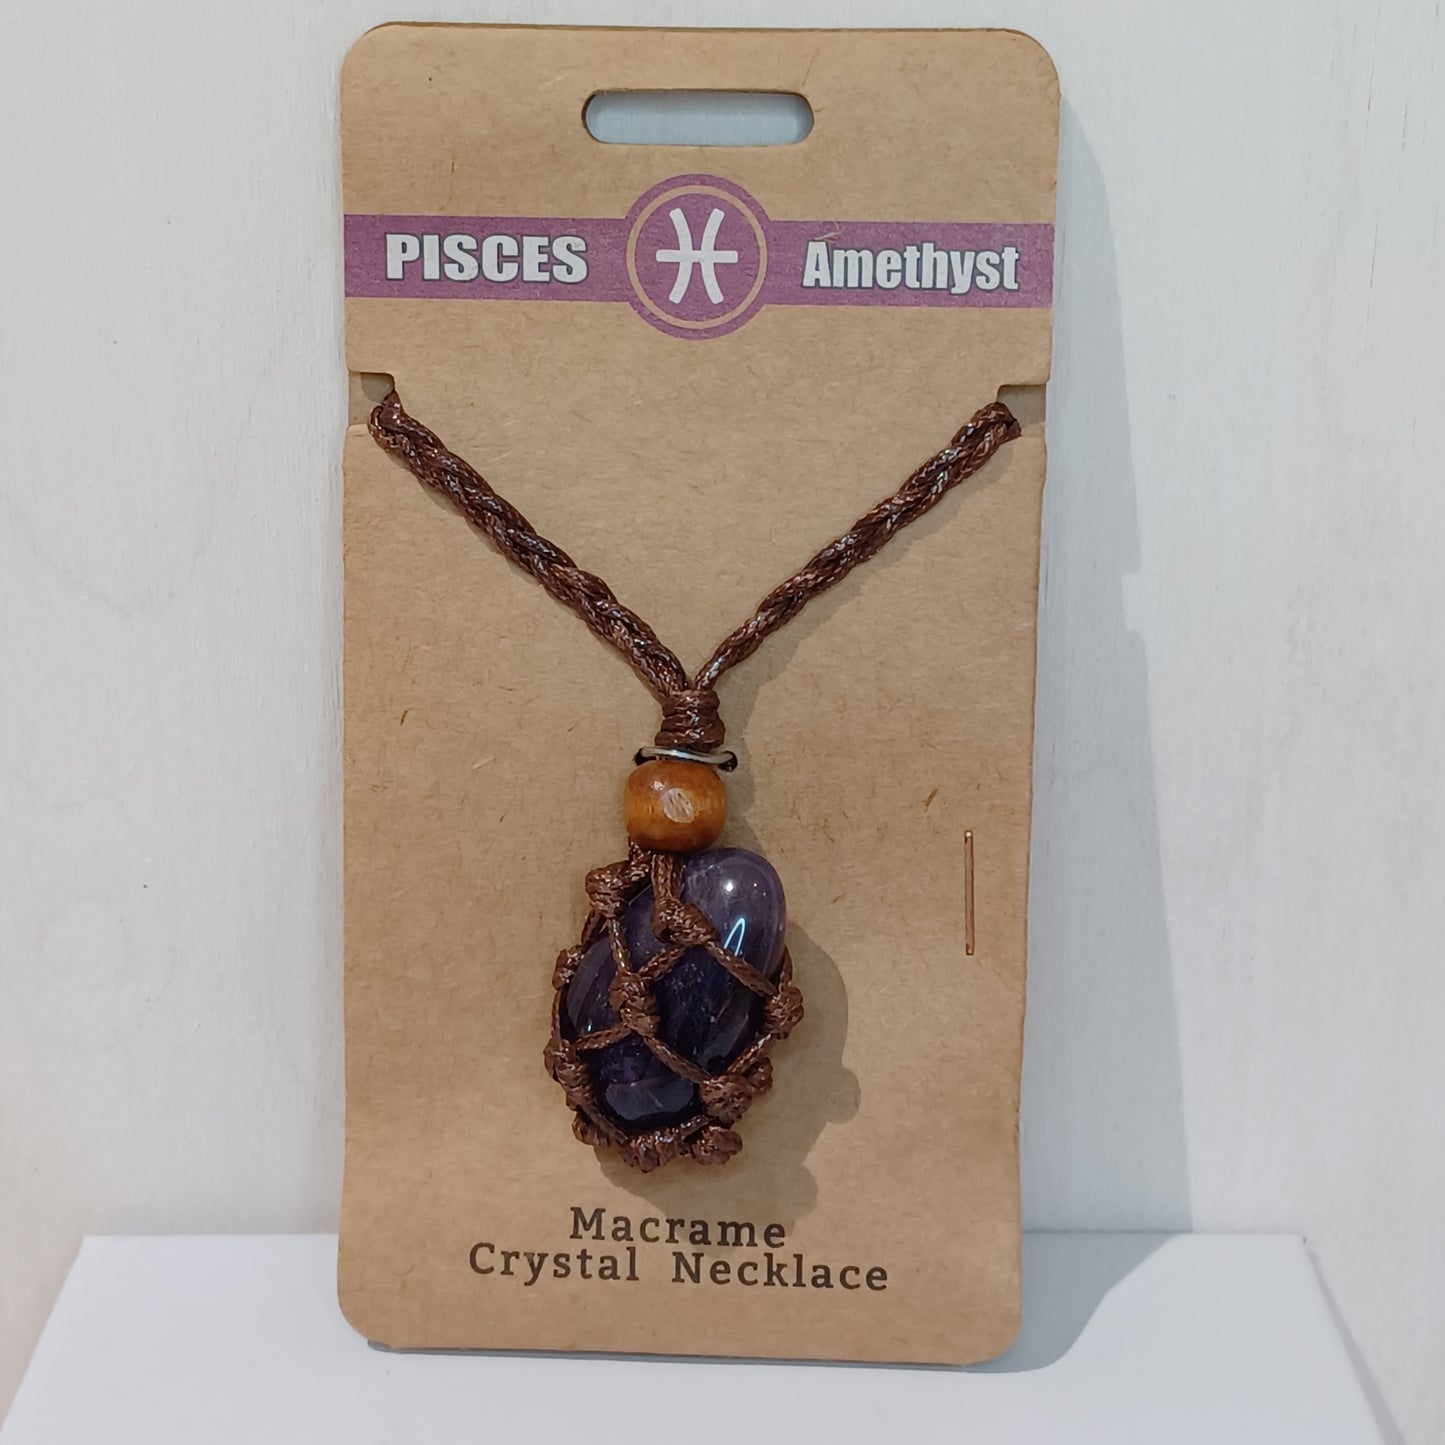 Macramé Crystal Necklace - Pisces Amethyst